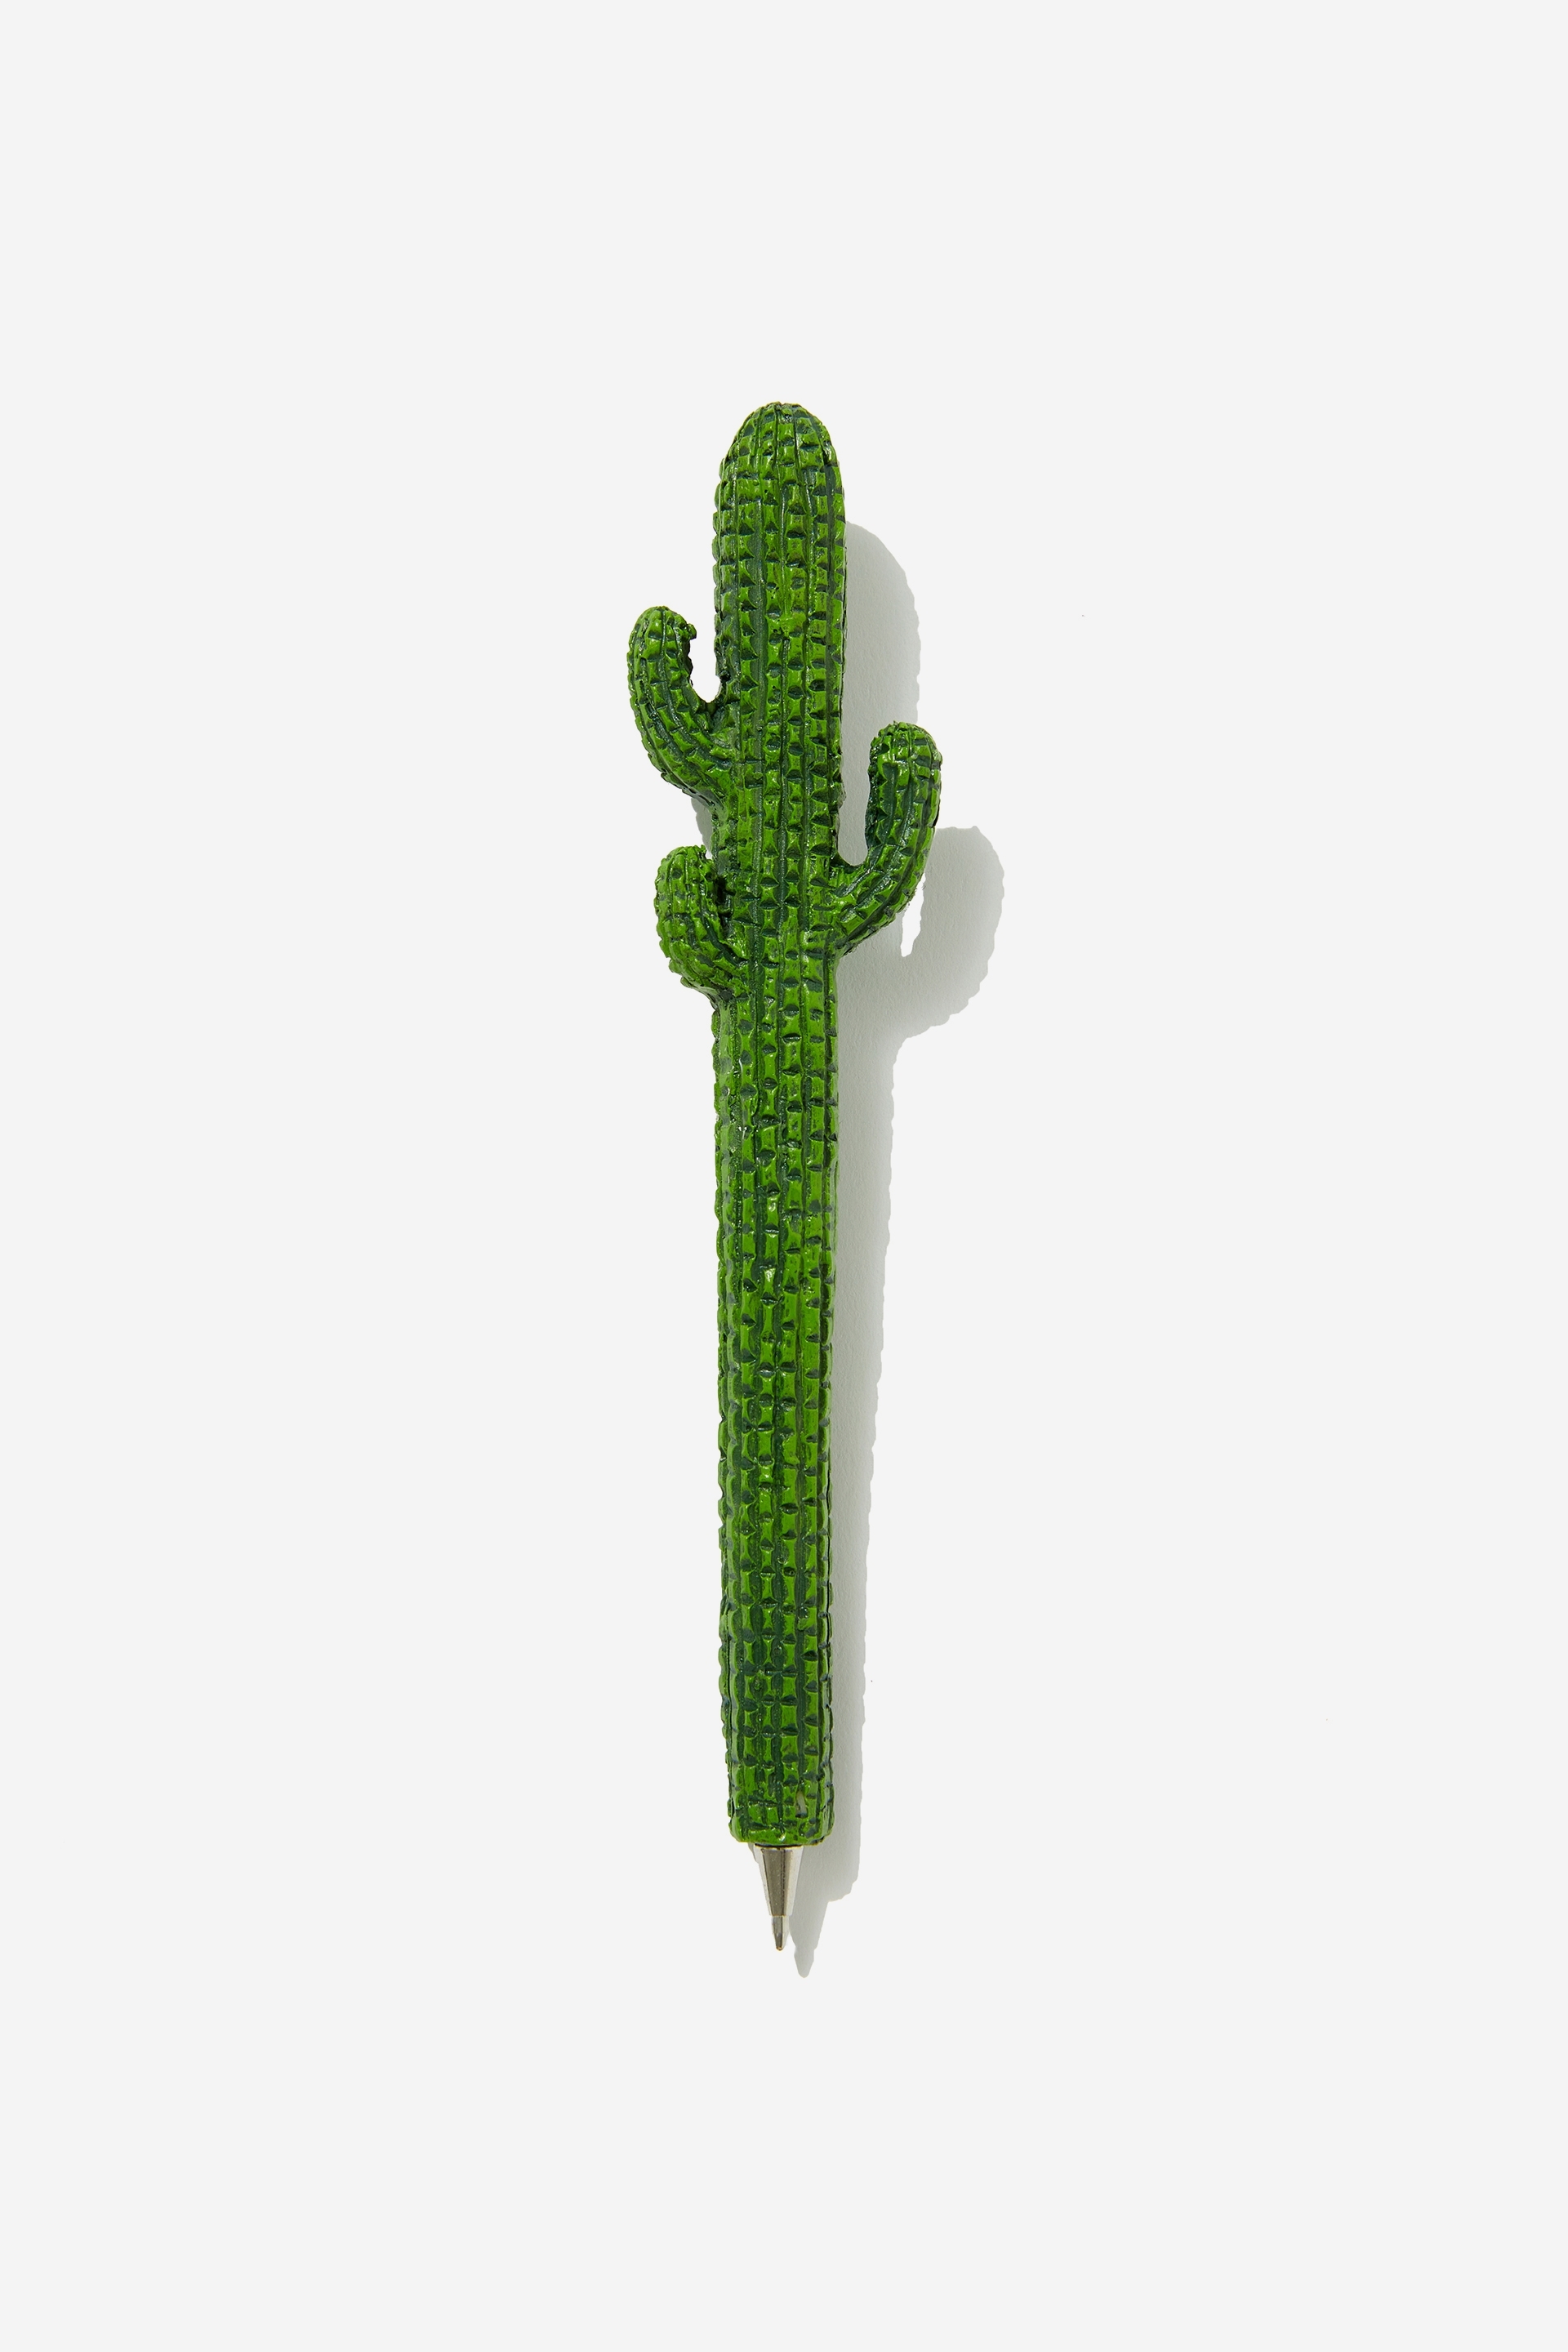 Typo - The Novelty Pen - Cactus